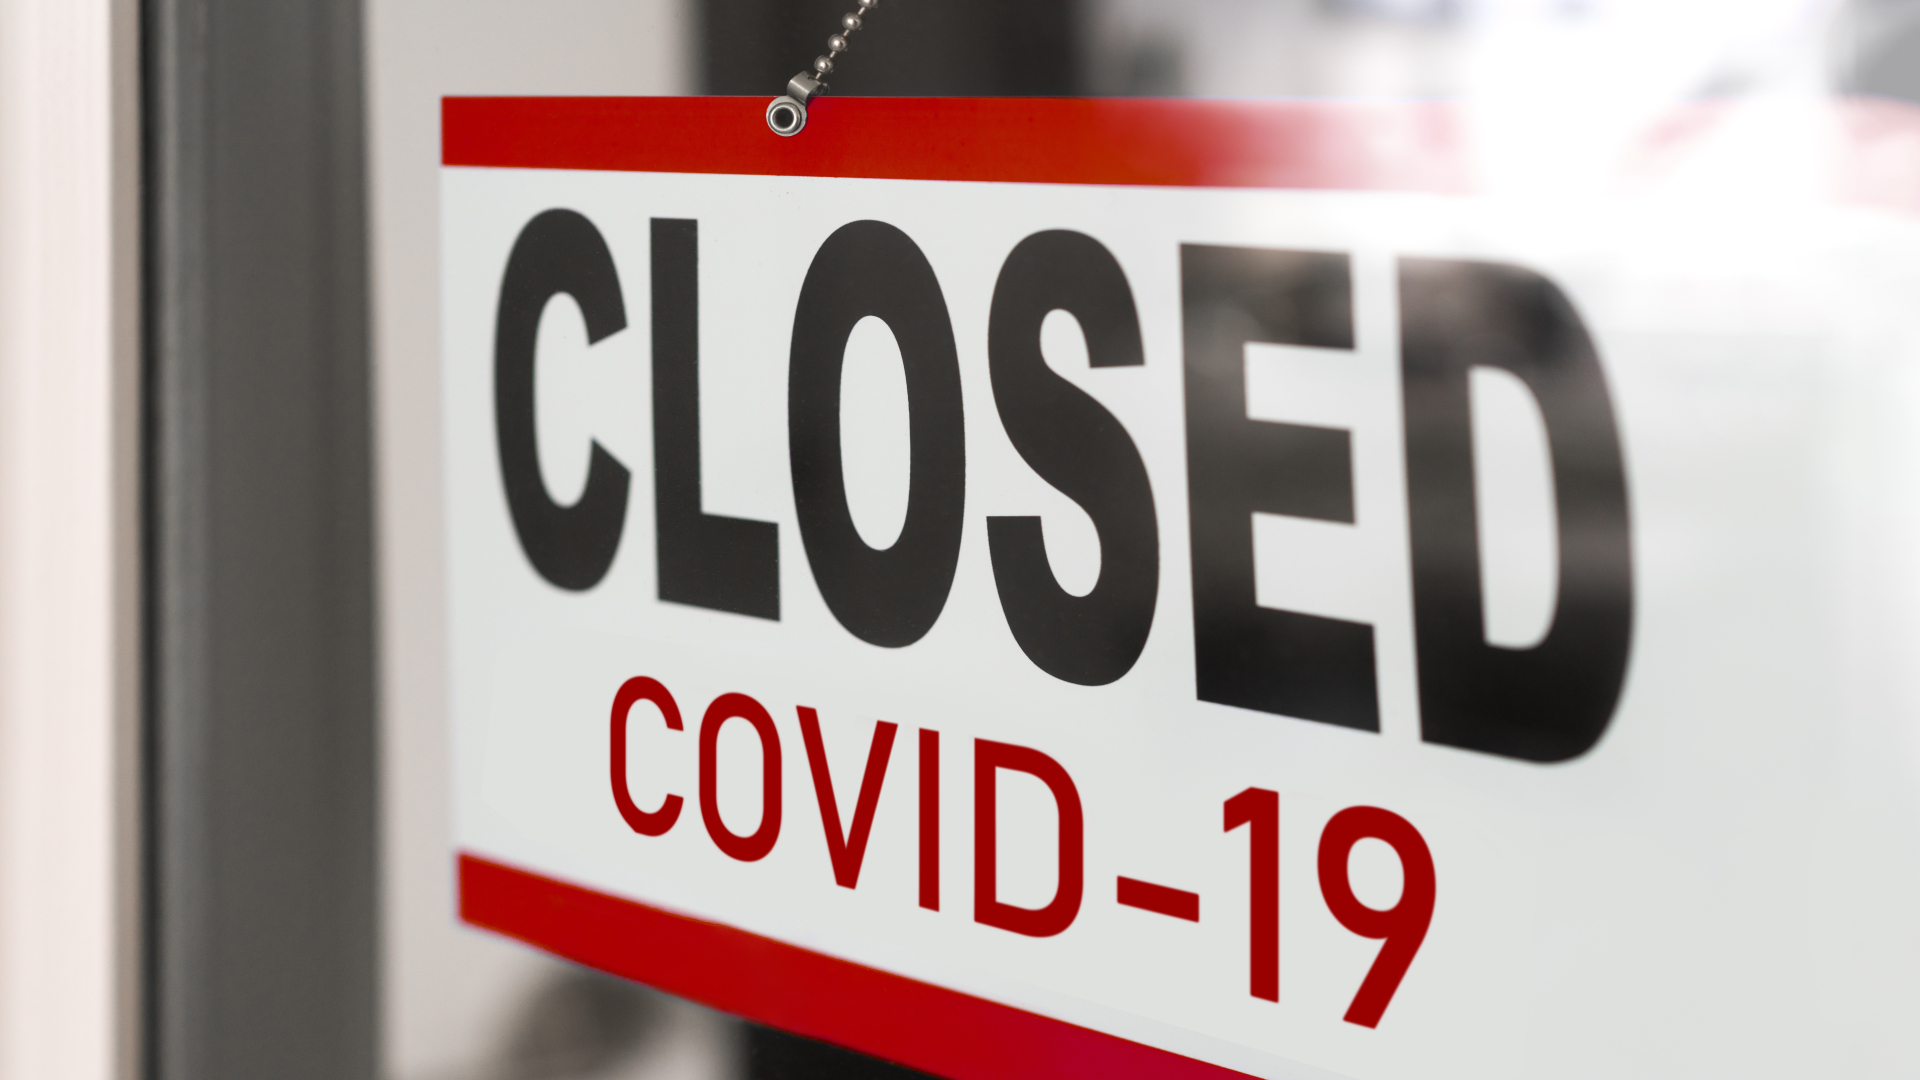 Sign Closed COVID-19